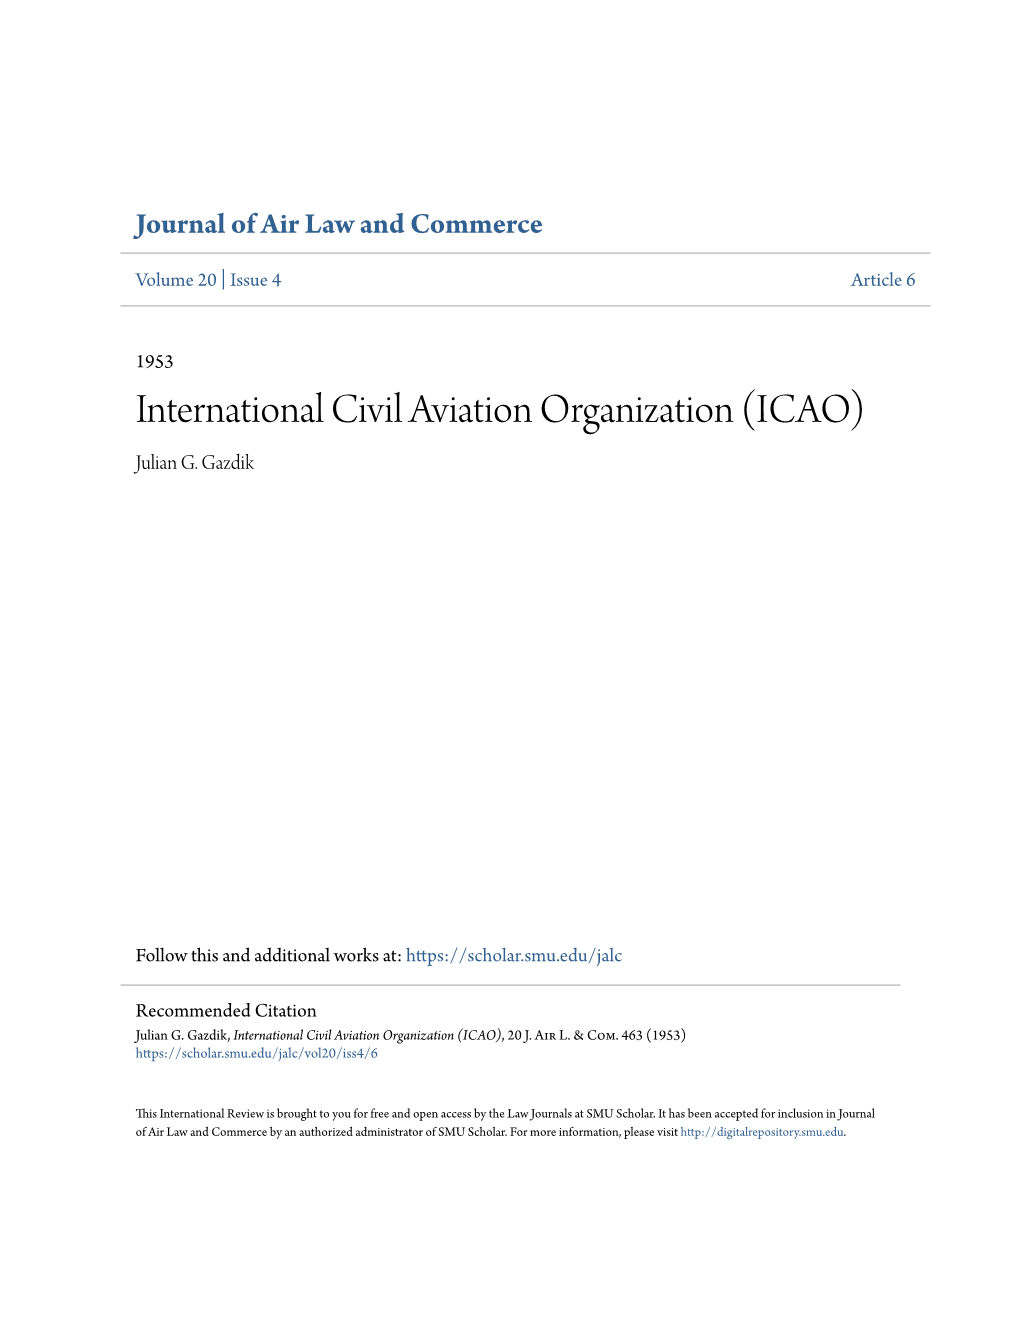 International Civil Aviation Organization (ICAO) Julian G